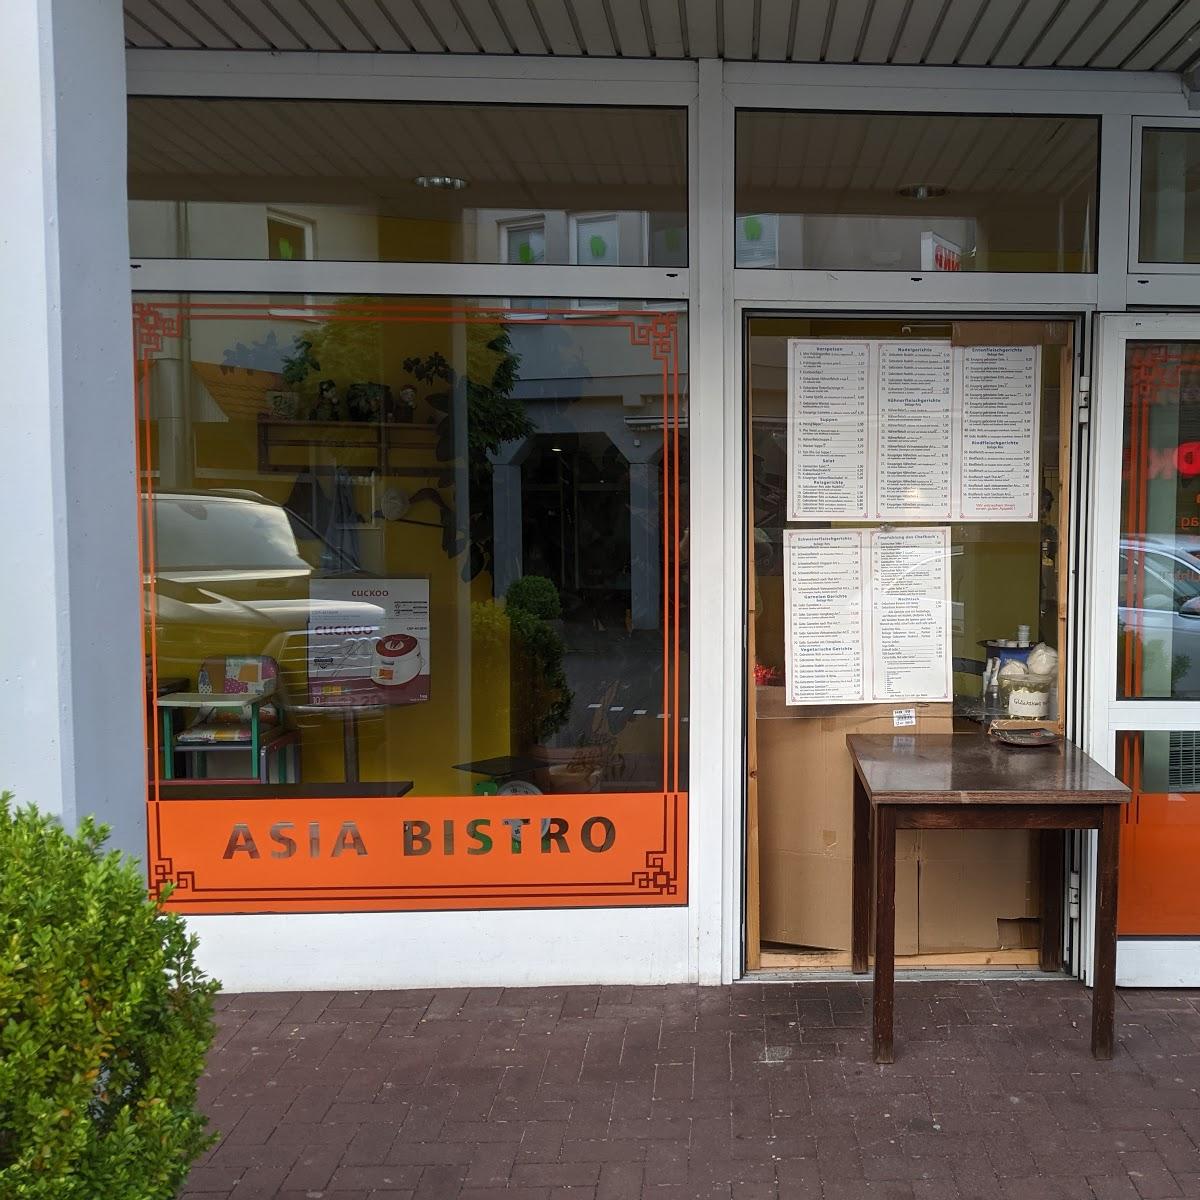 Restaurant "Linh Long Asia Bistro" in Schwalmstadt